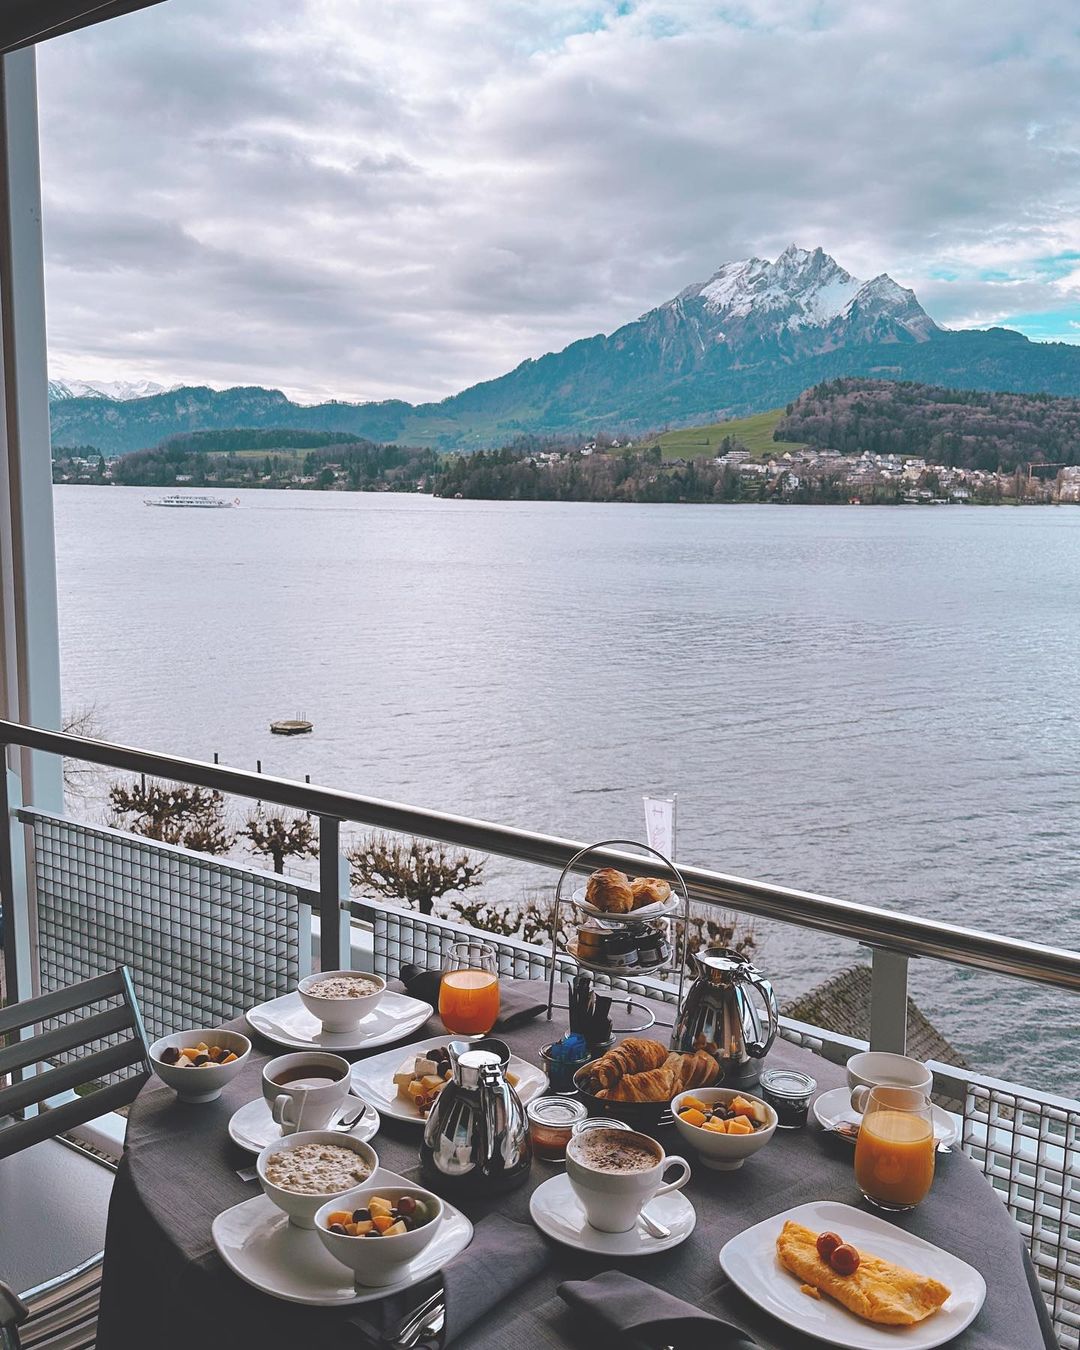 Breakfast with a view at Restaurant HERMITAGE, Lucerne, Switzerland